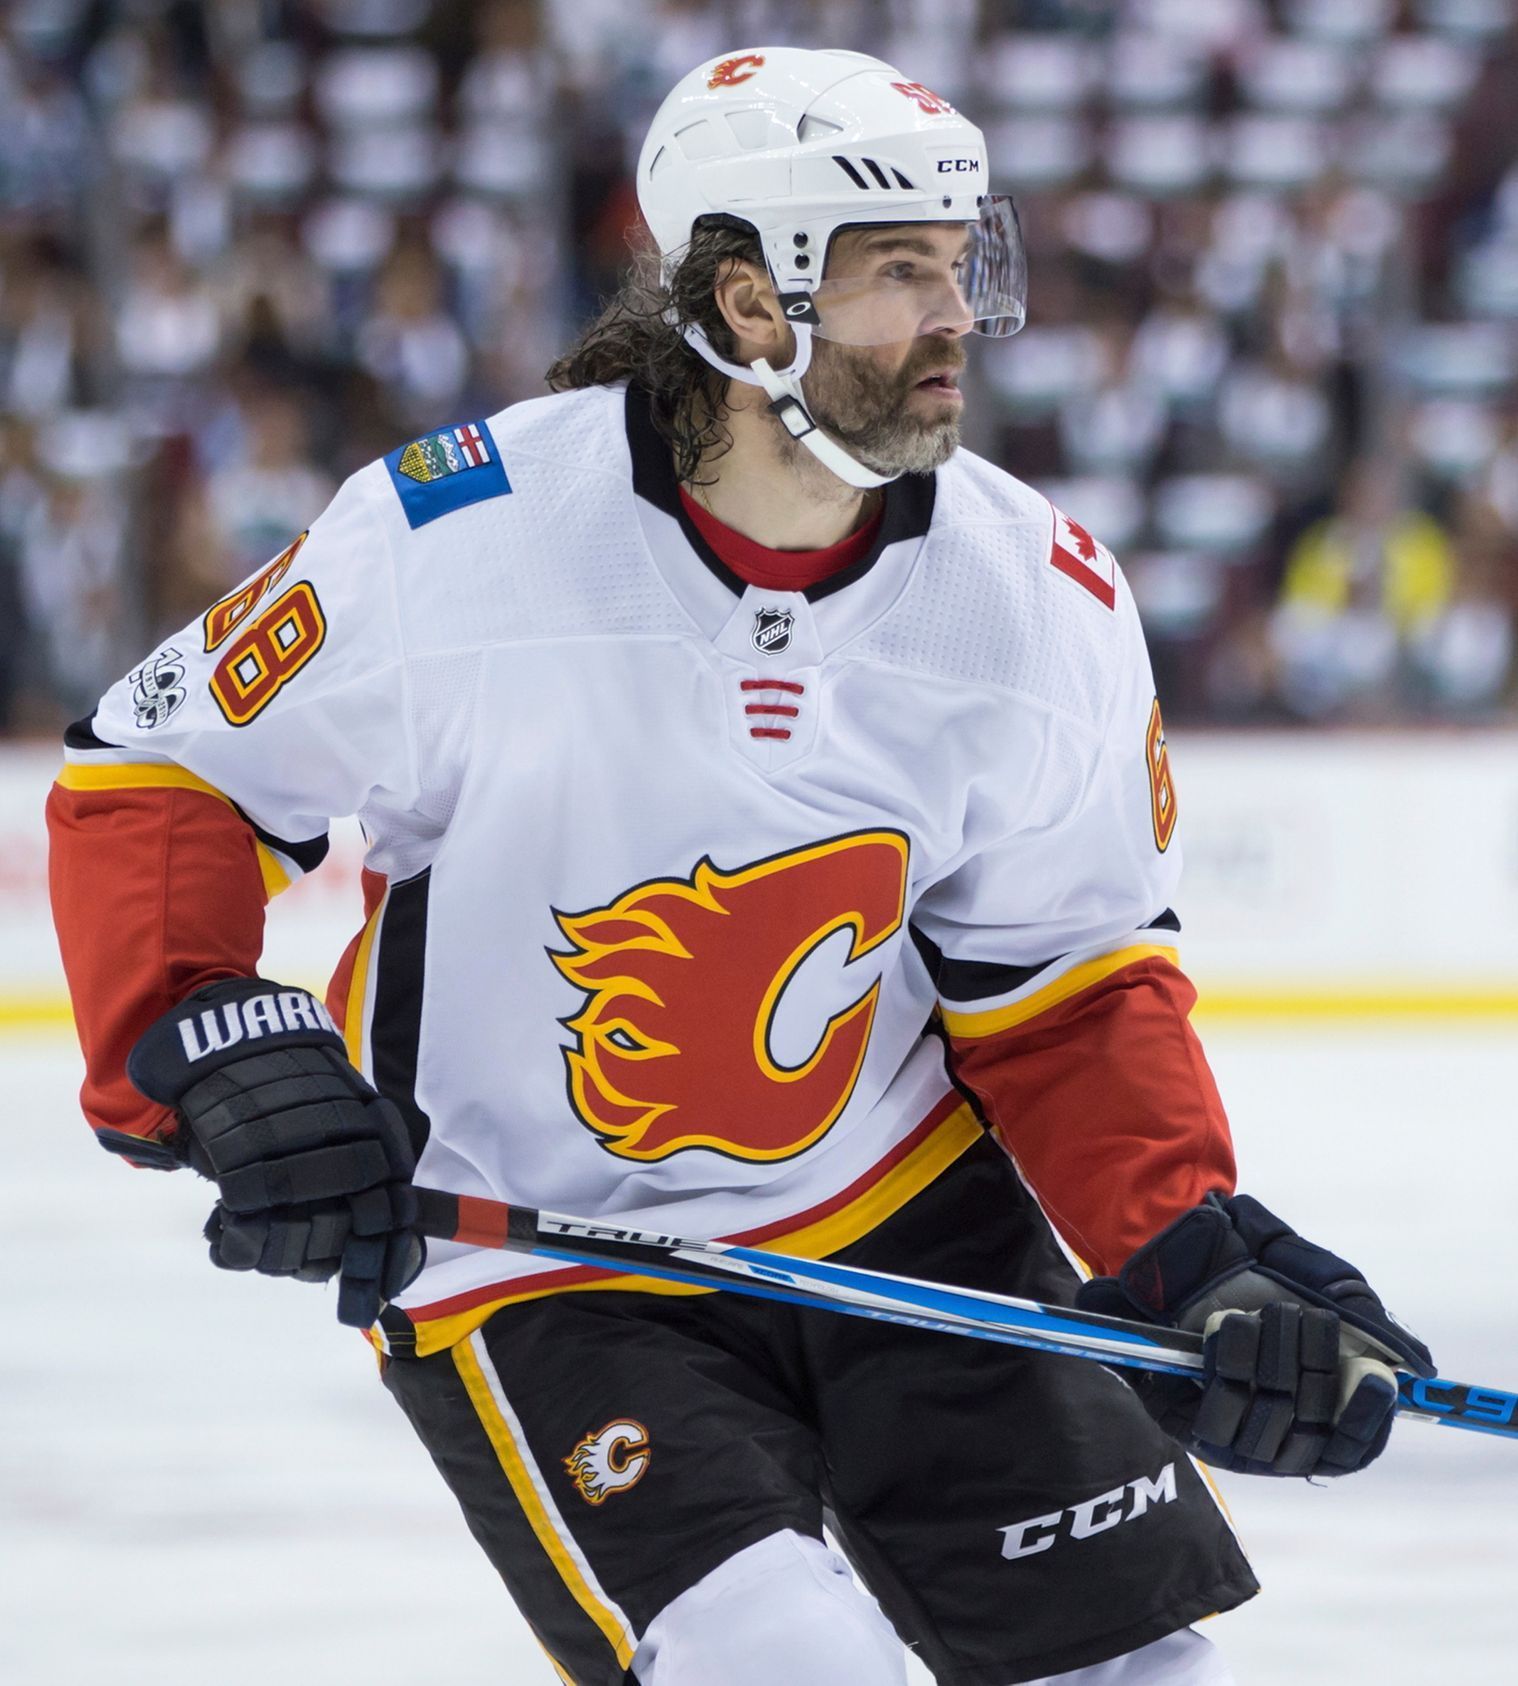 Jaromír Jágr, Calgary Flames, NHL 2017/18